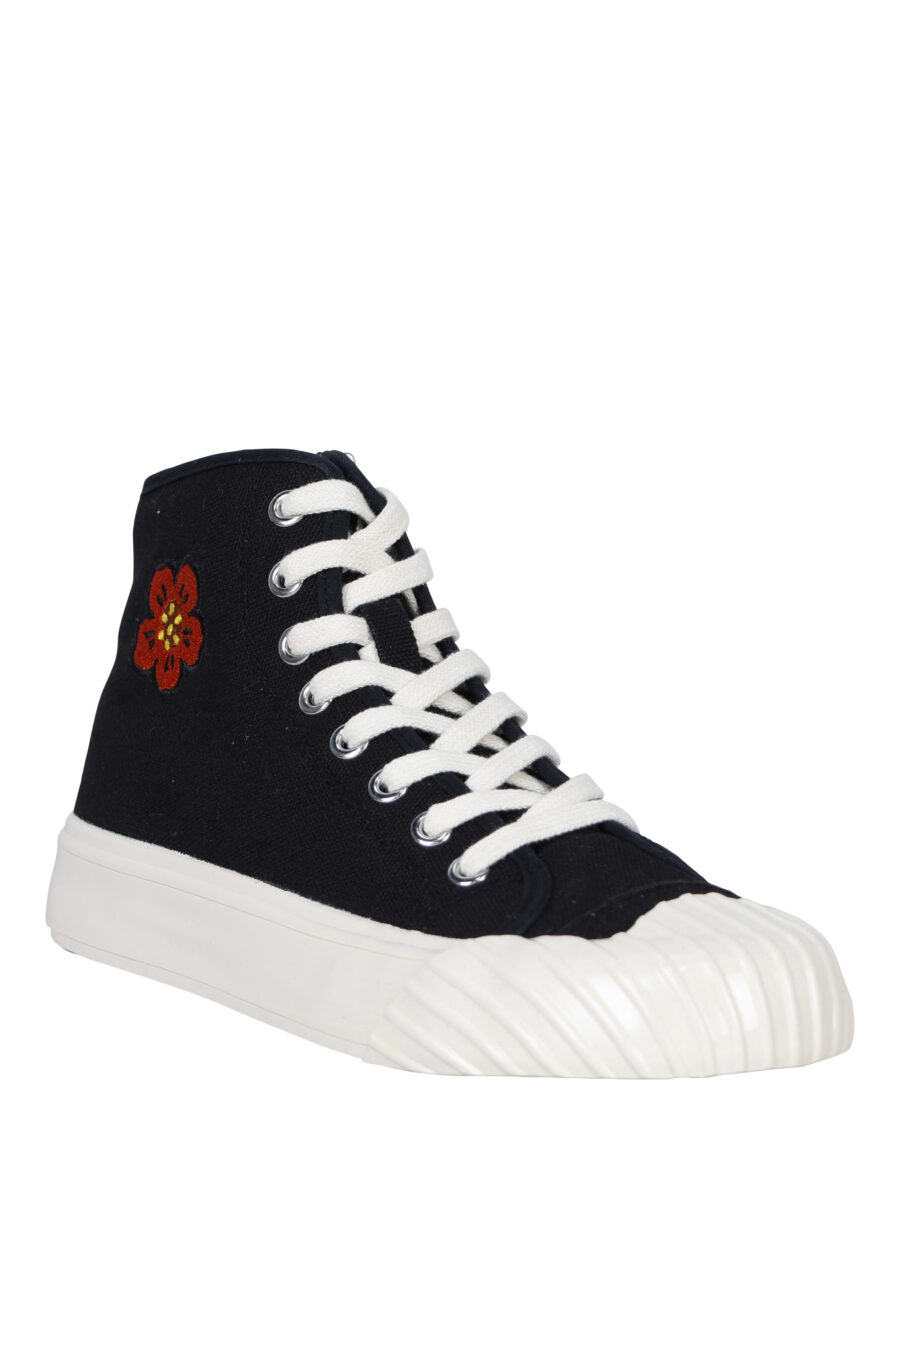 Zapatillas negras altas "kenzo school" con logo "boke flower" - 3612230423640 1